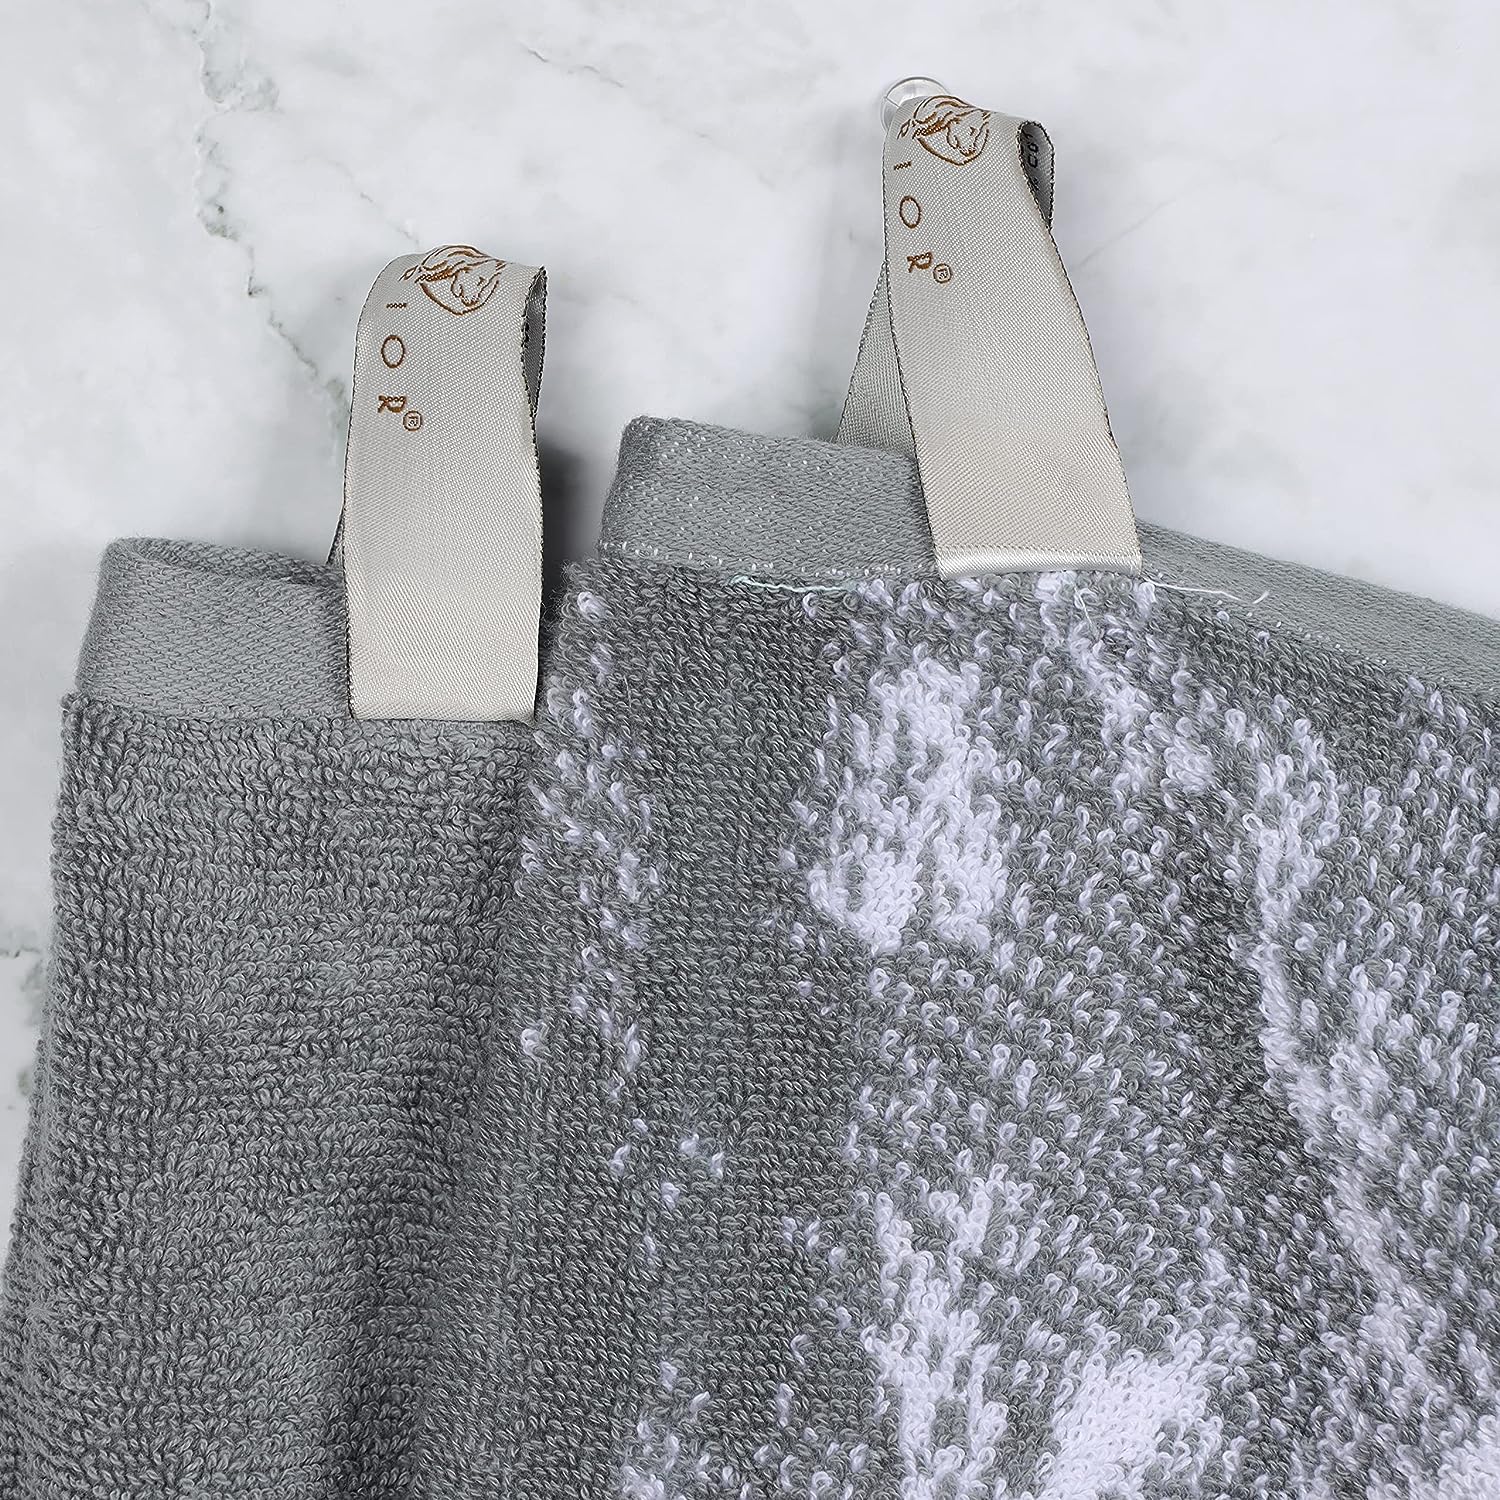 Superior Cotton Medium Weight Marble Solid Jacquard Border Bath Towels (Set of 4) - Grey